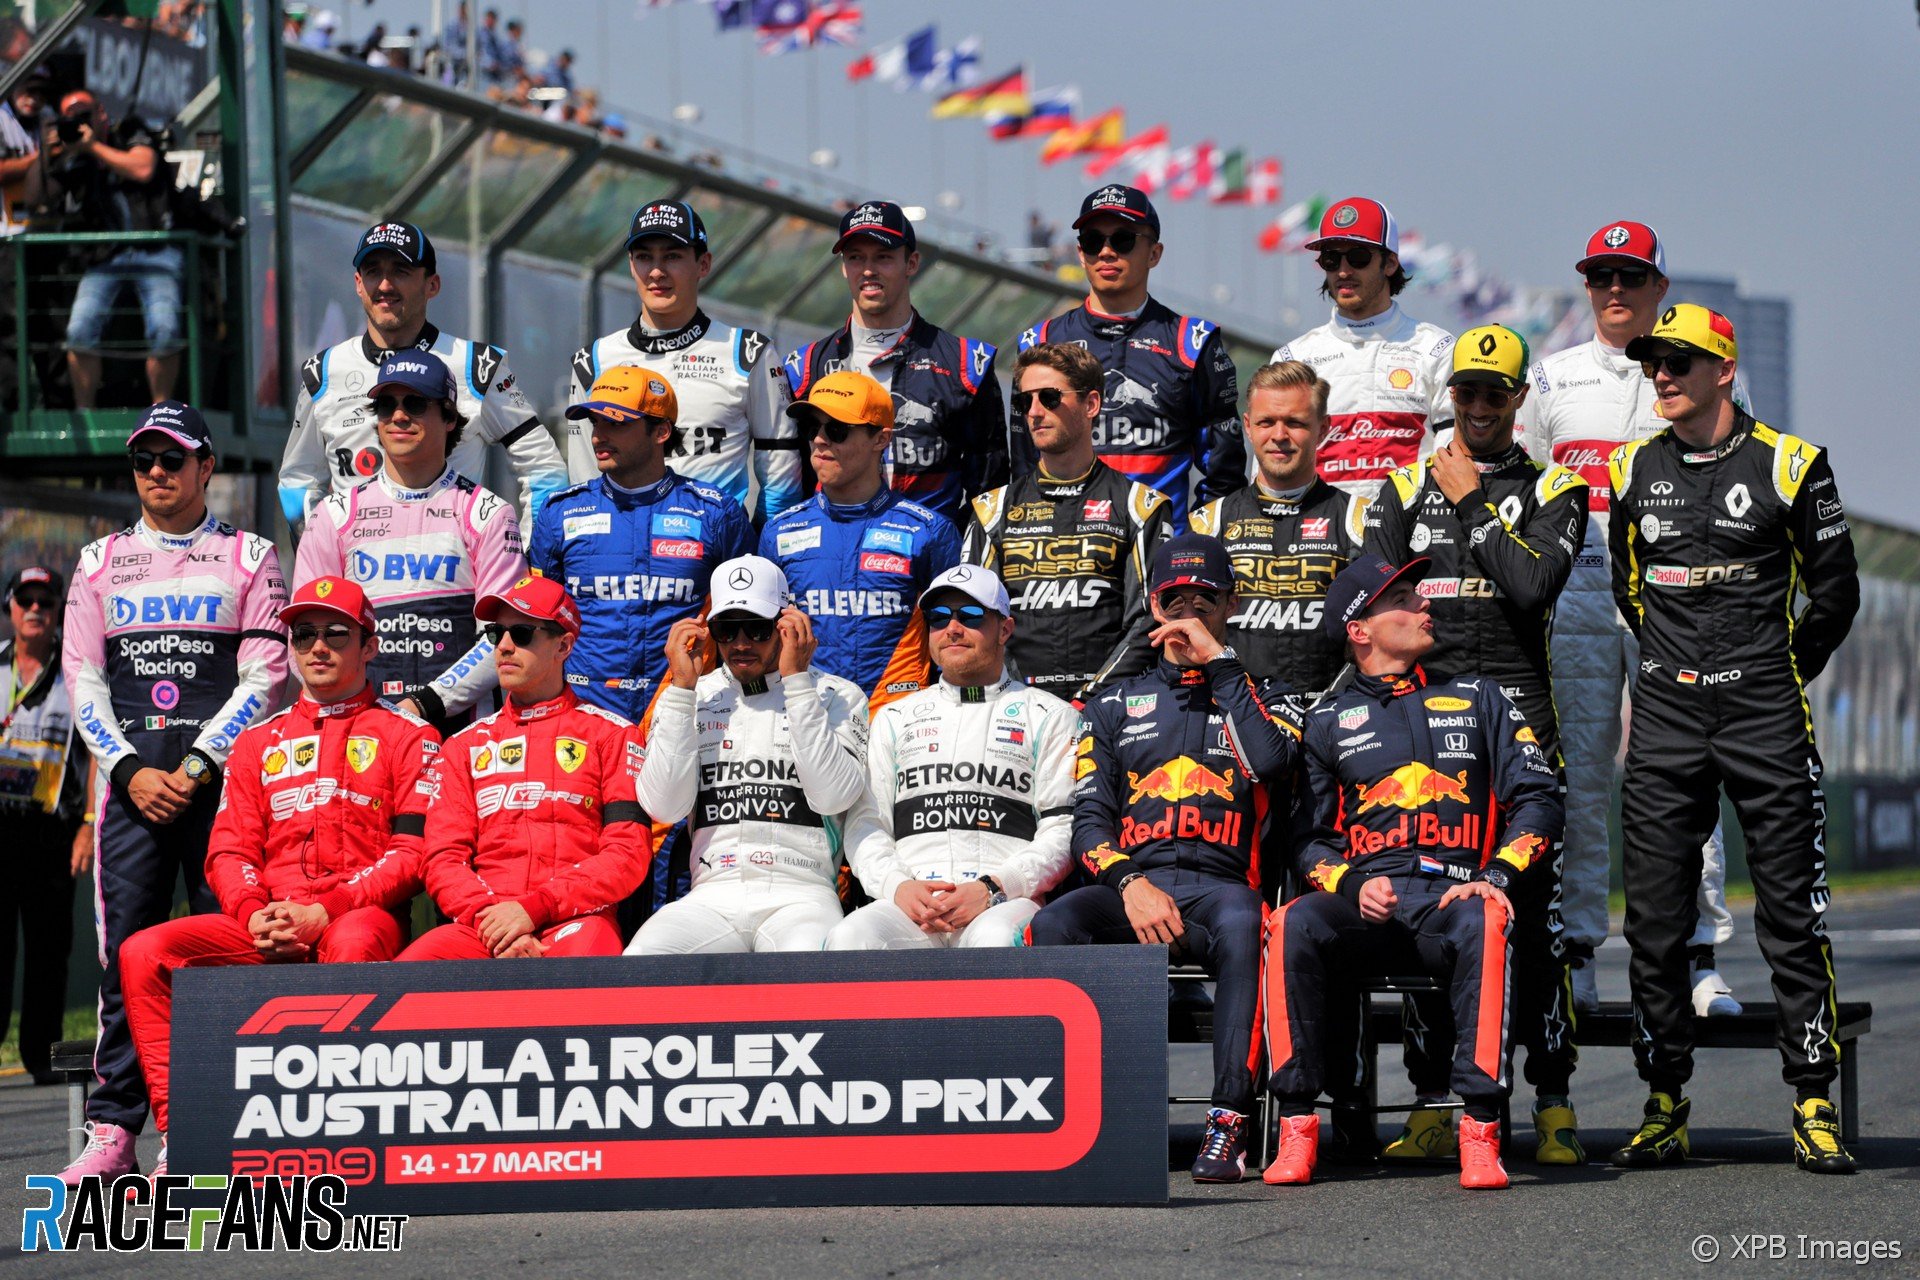 Wallpaper Australian Grand Prix of 2019. Marco's Formula 1 Page